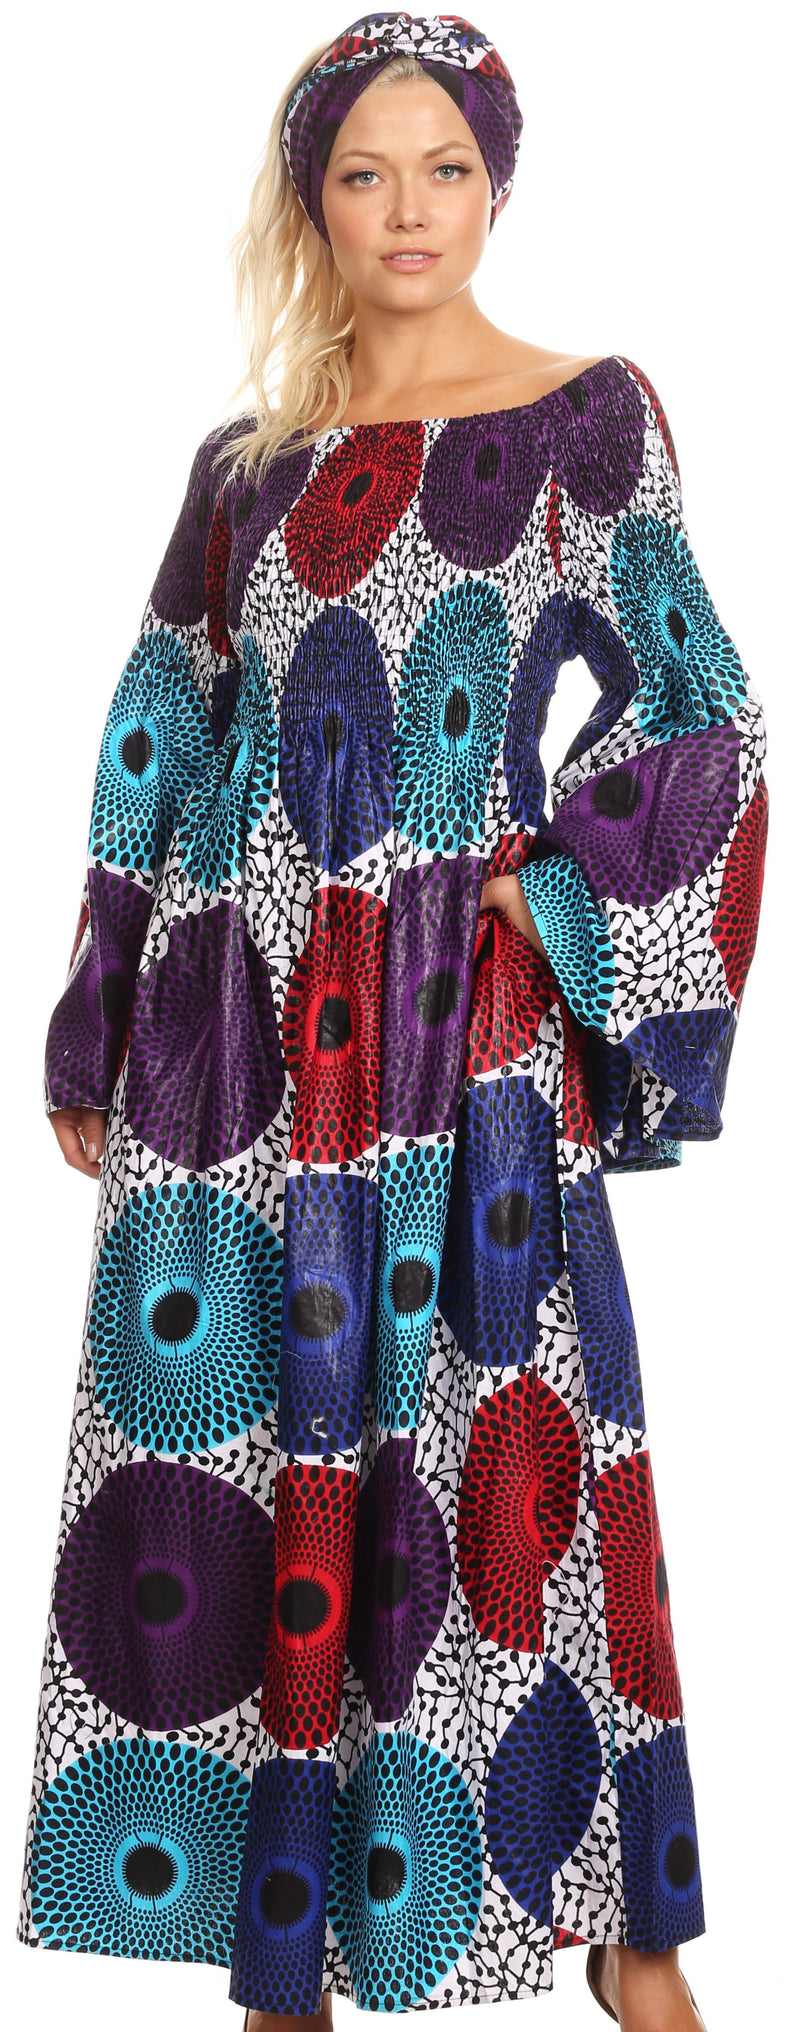 Sakkas Akela Womens Gypsy Peasant Boho Smocked Dress in African Ankara Print